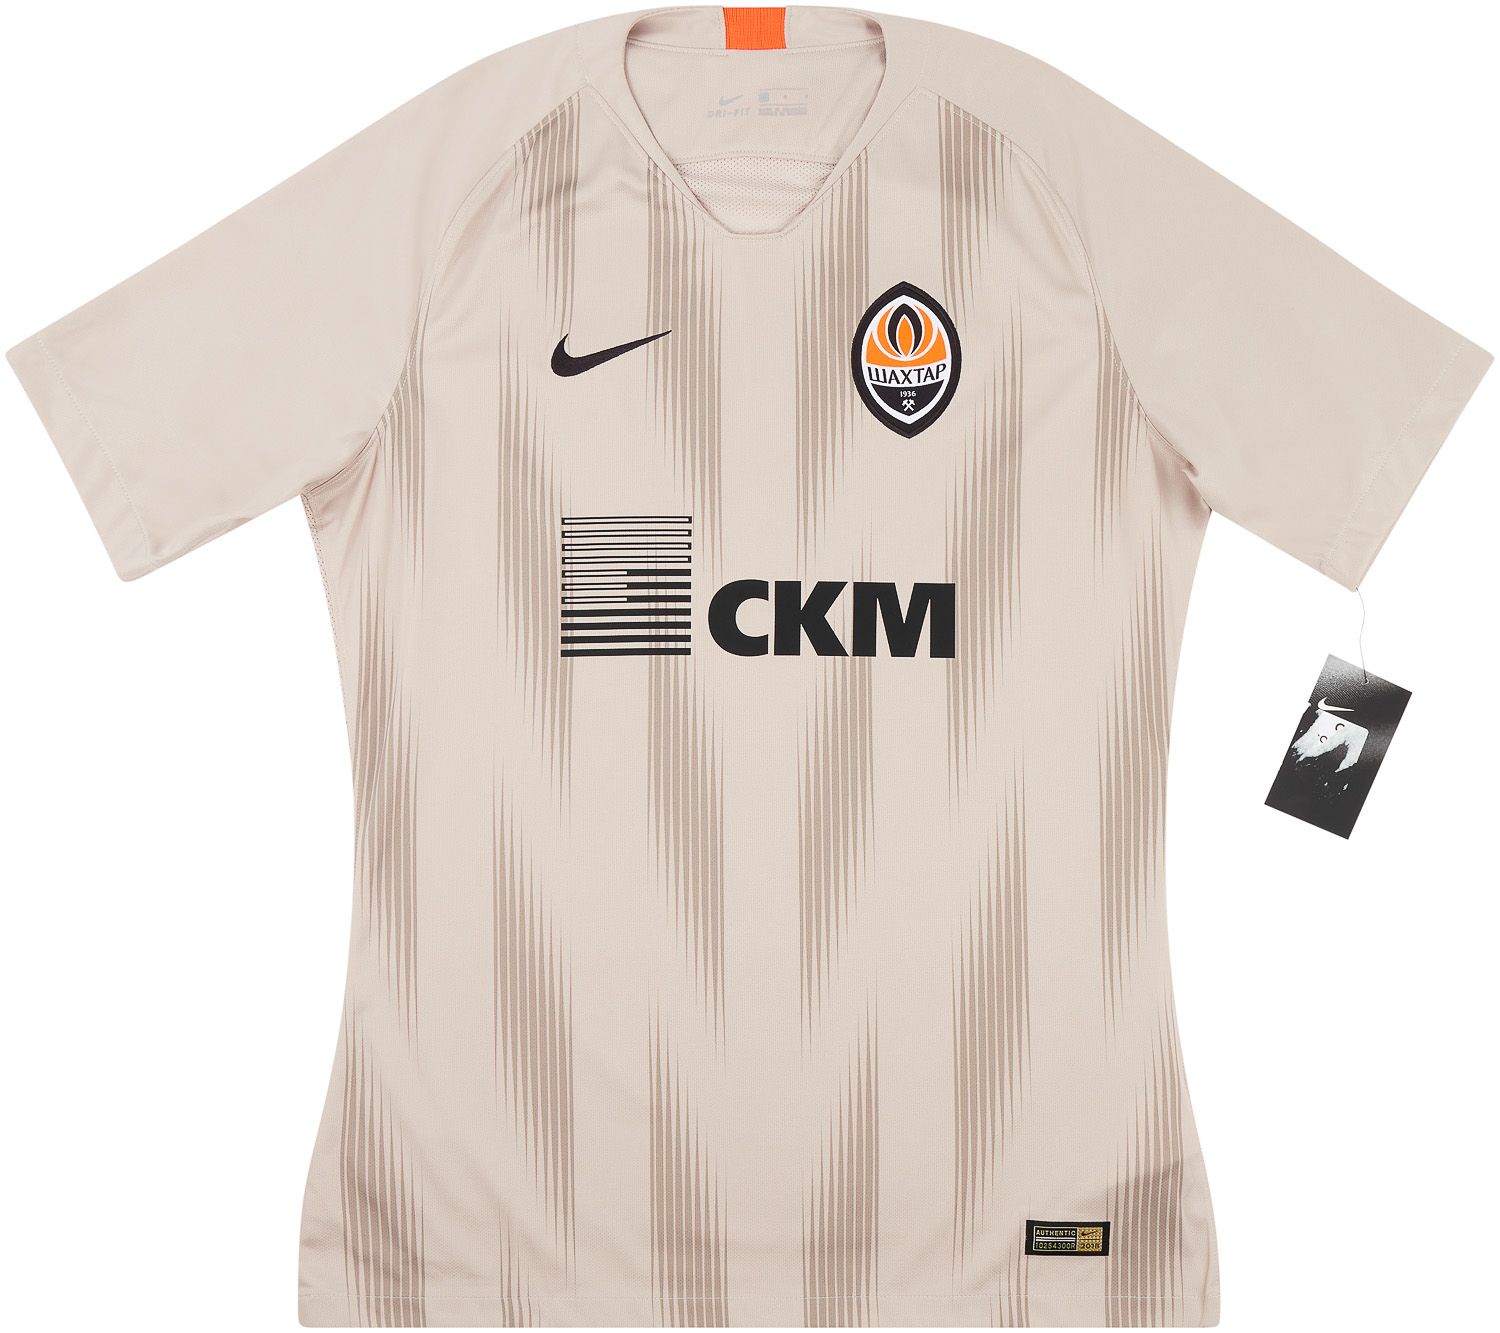 Shakhtar Donetsk  Uit  shirt  (Original)